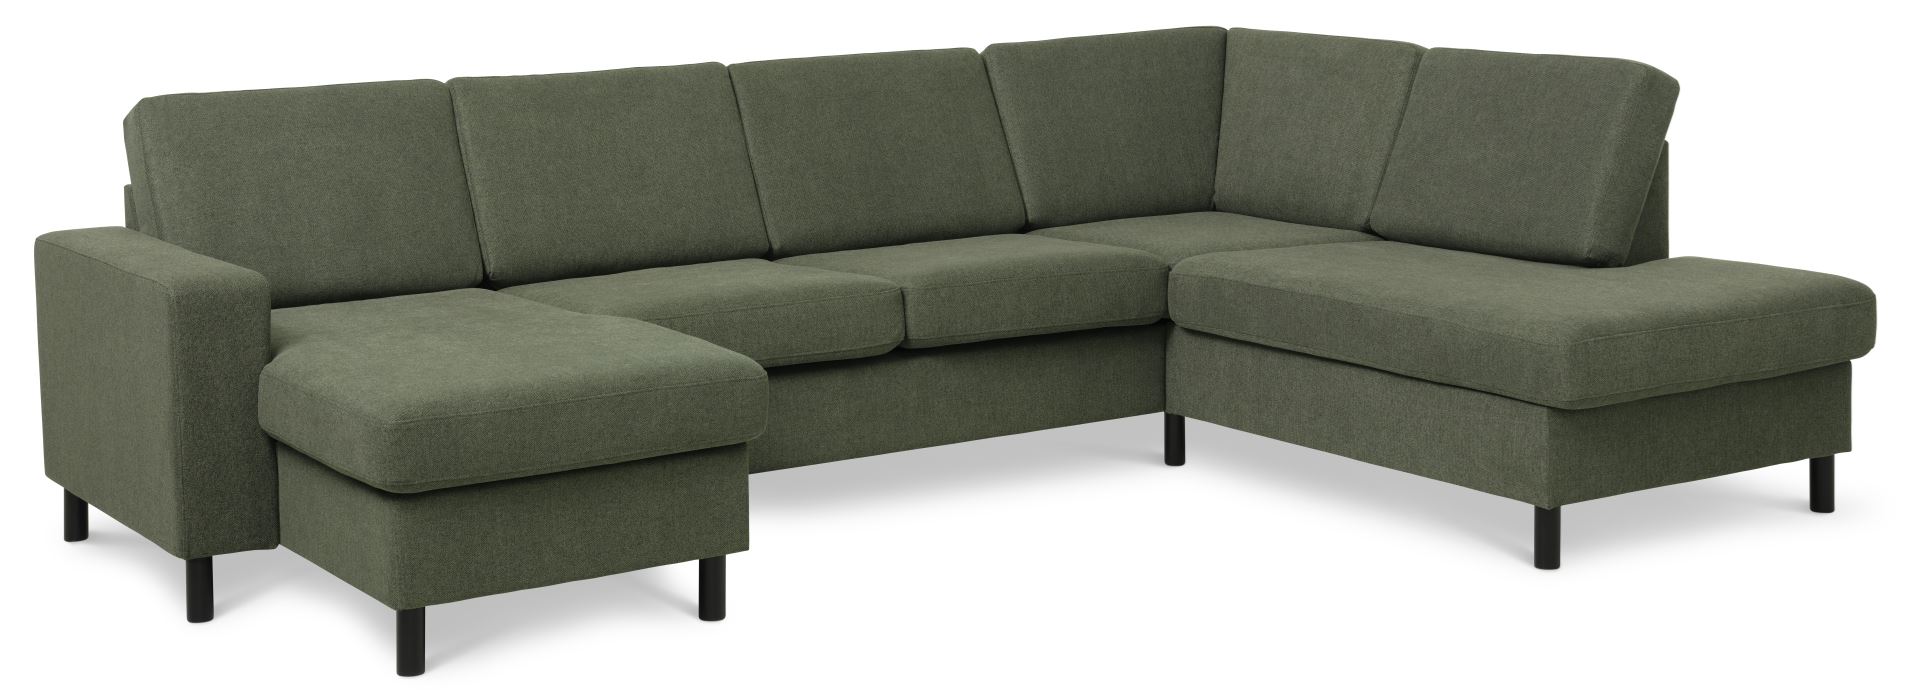 Pan set 5 U OE right sofa med chaiselong - vinter mosgrøn polyester stof og sort træ